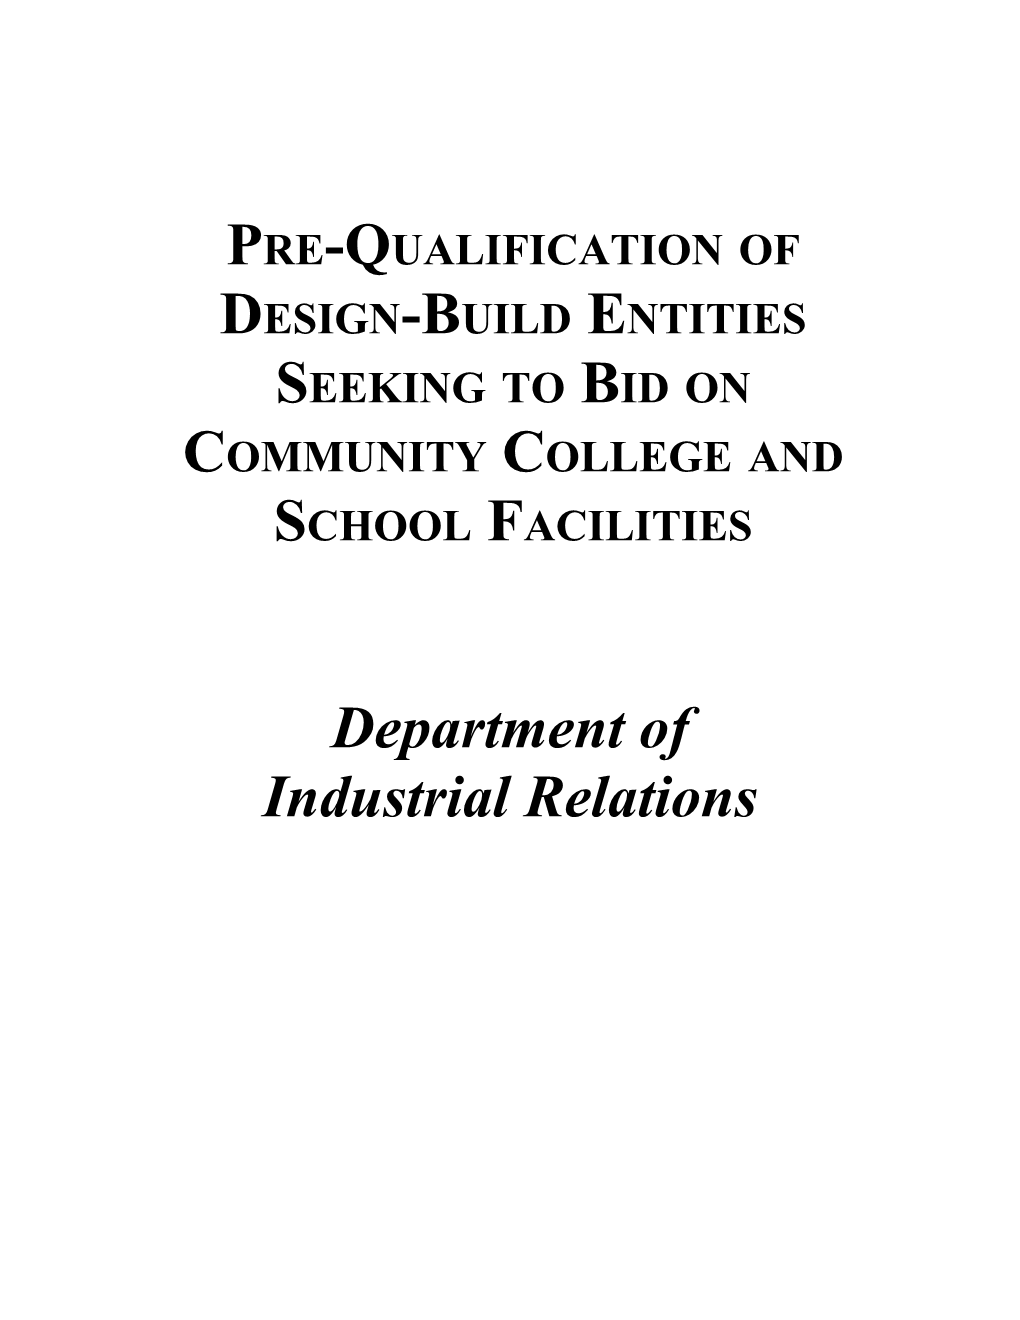 Pre-Qualification of Design-Build Entities Seeking to Bid on School Facilities